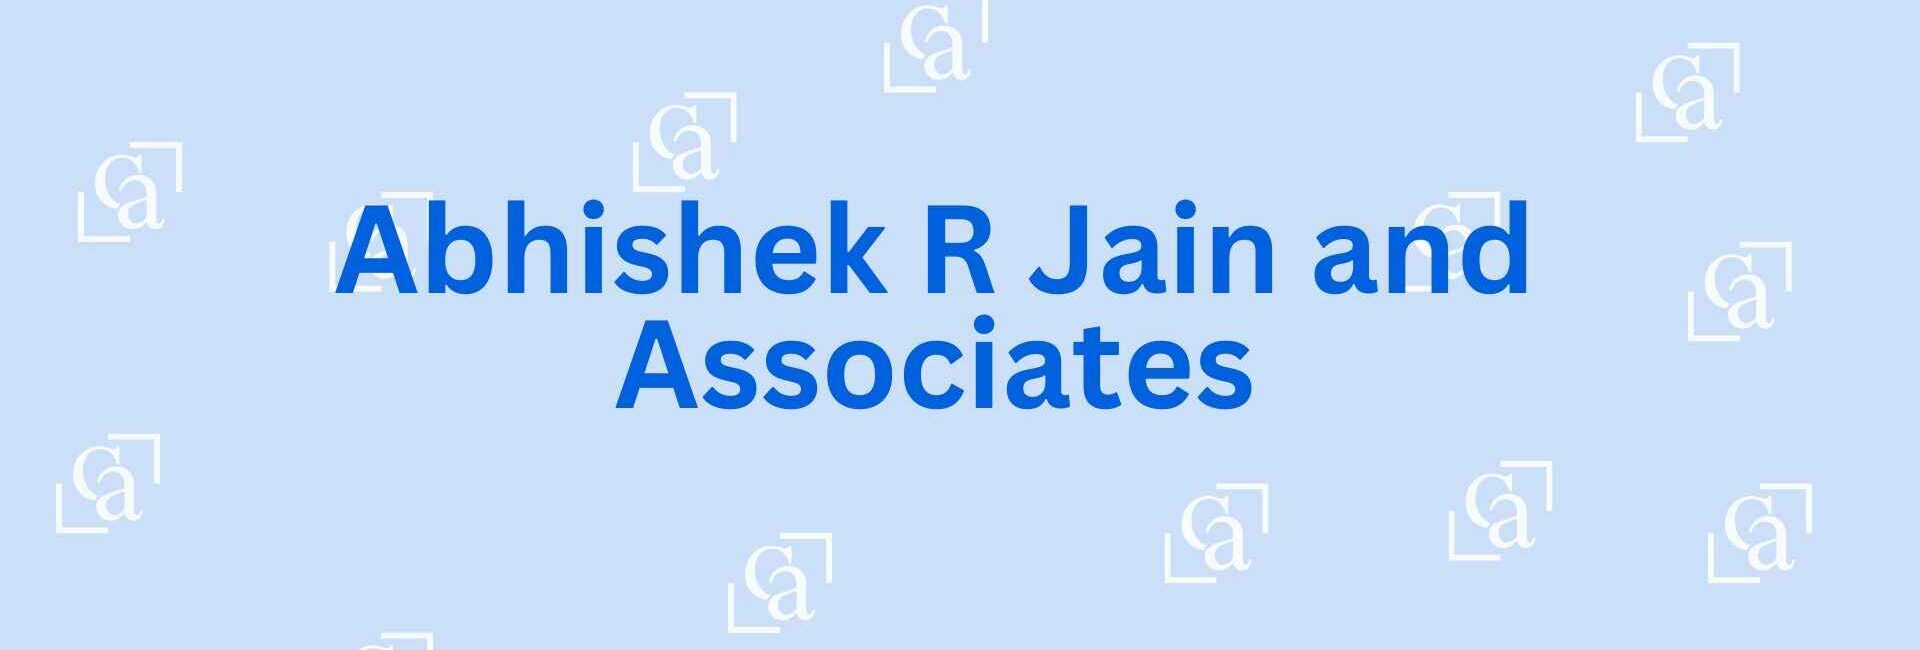 Abhishek R Jain and Associates - Chartered Accountant in Noida